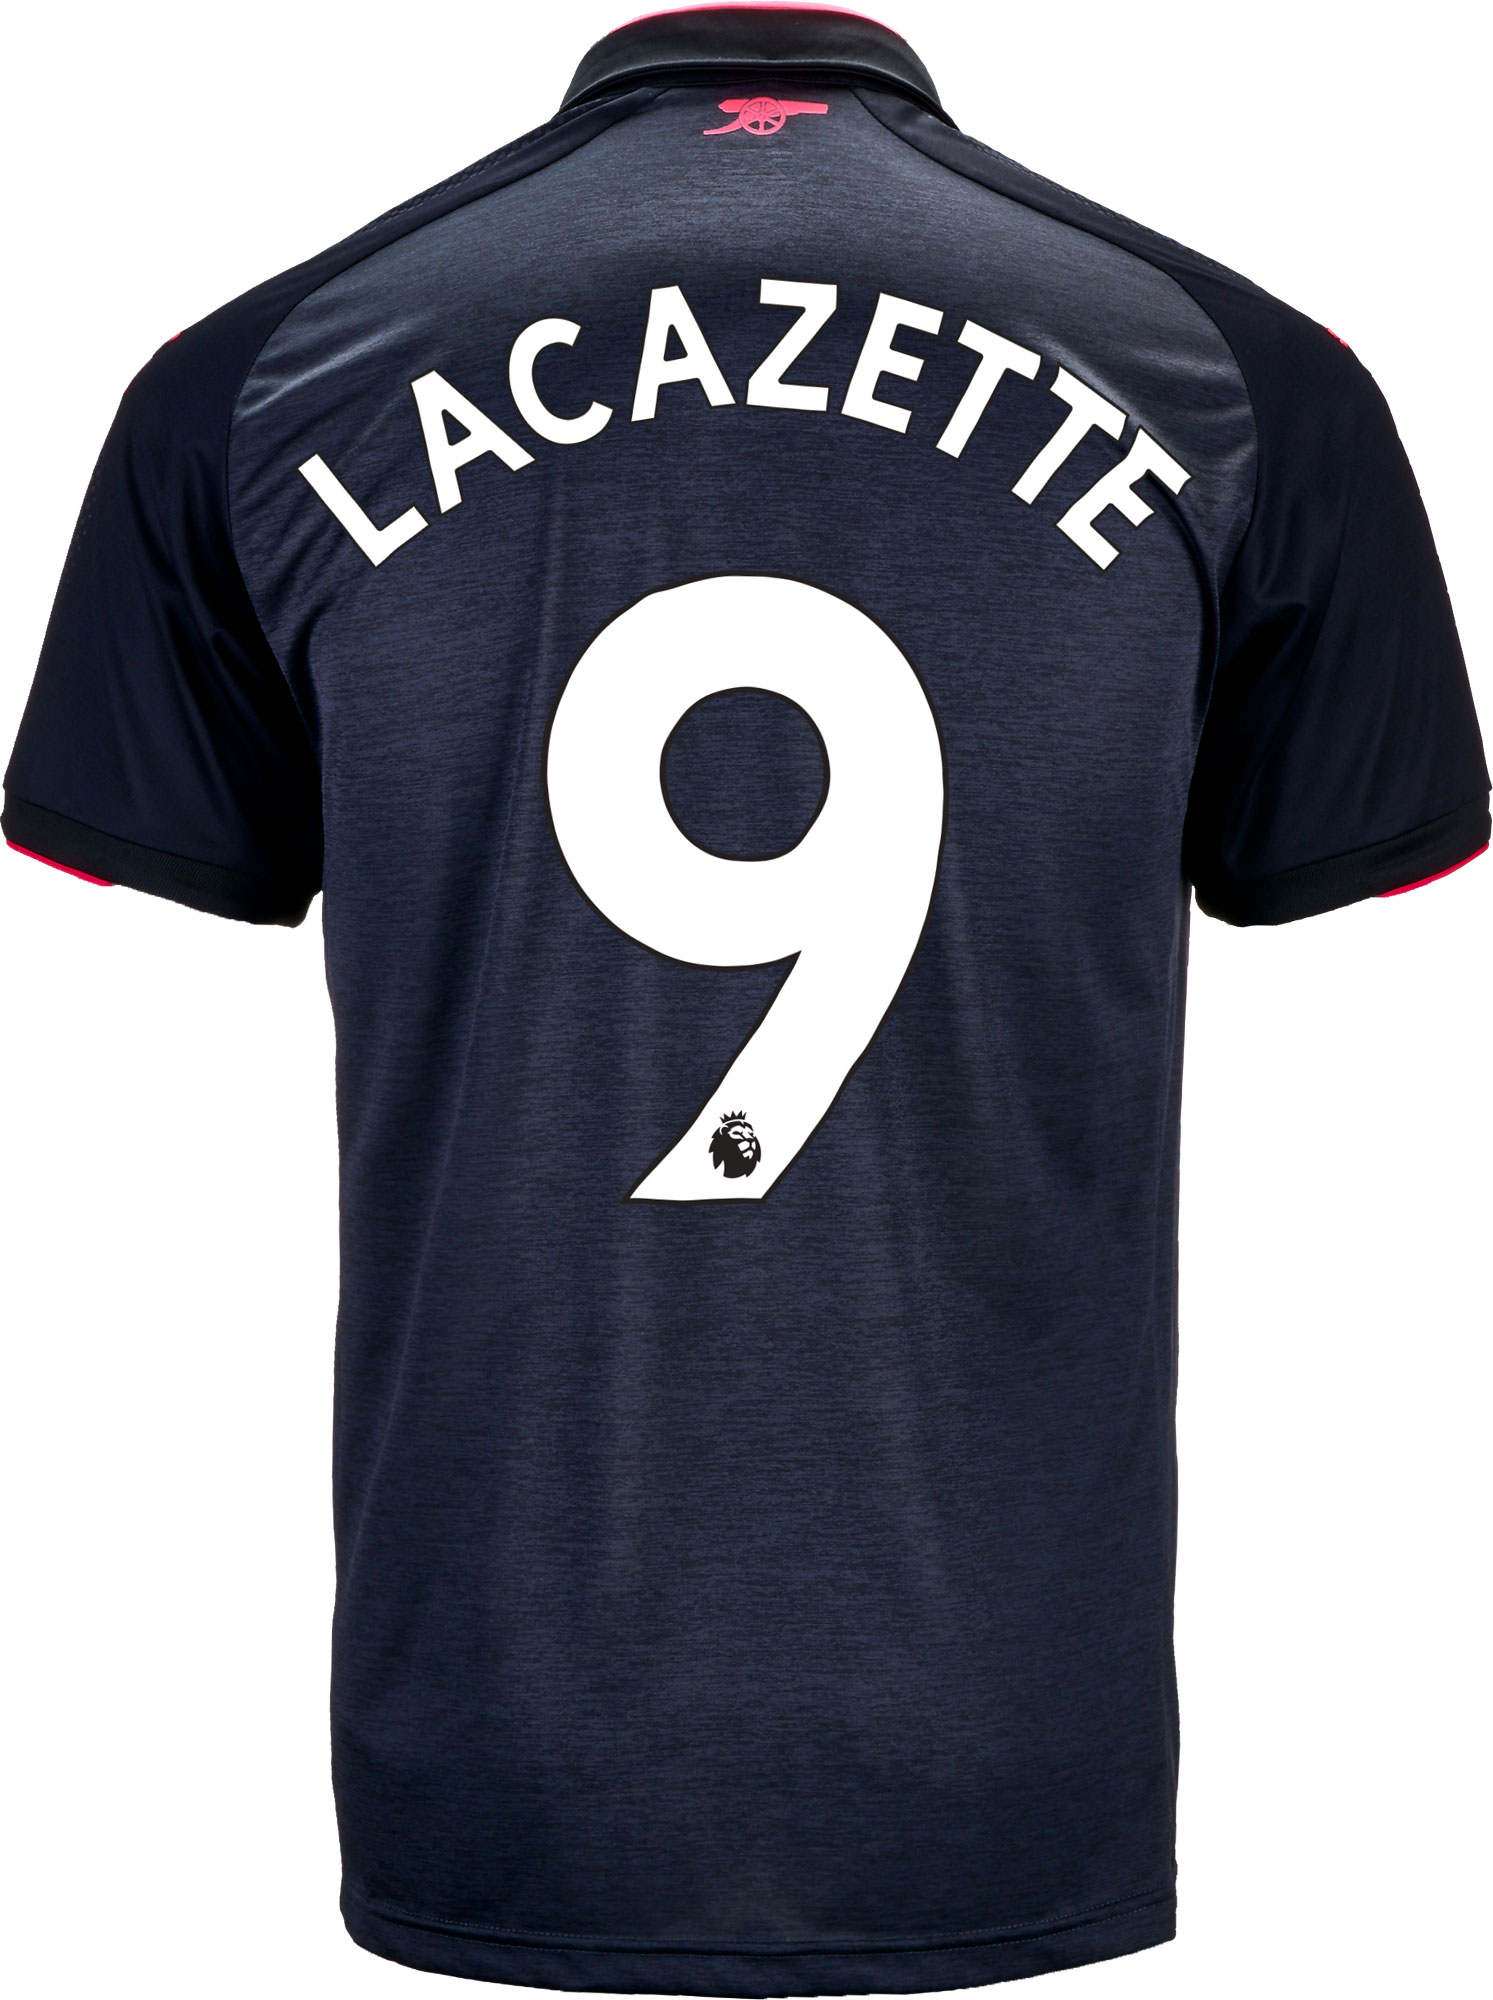 lacazette jersey number